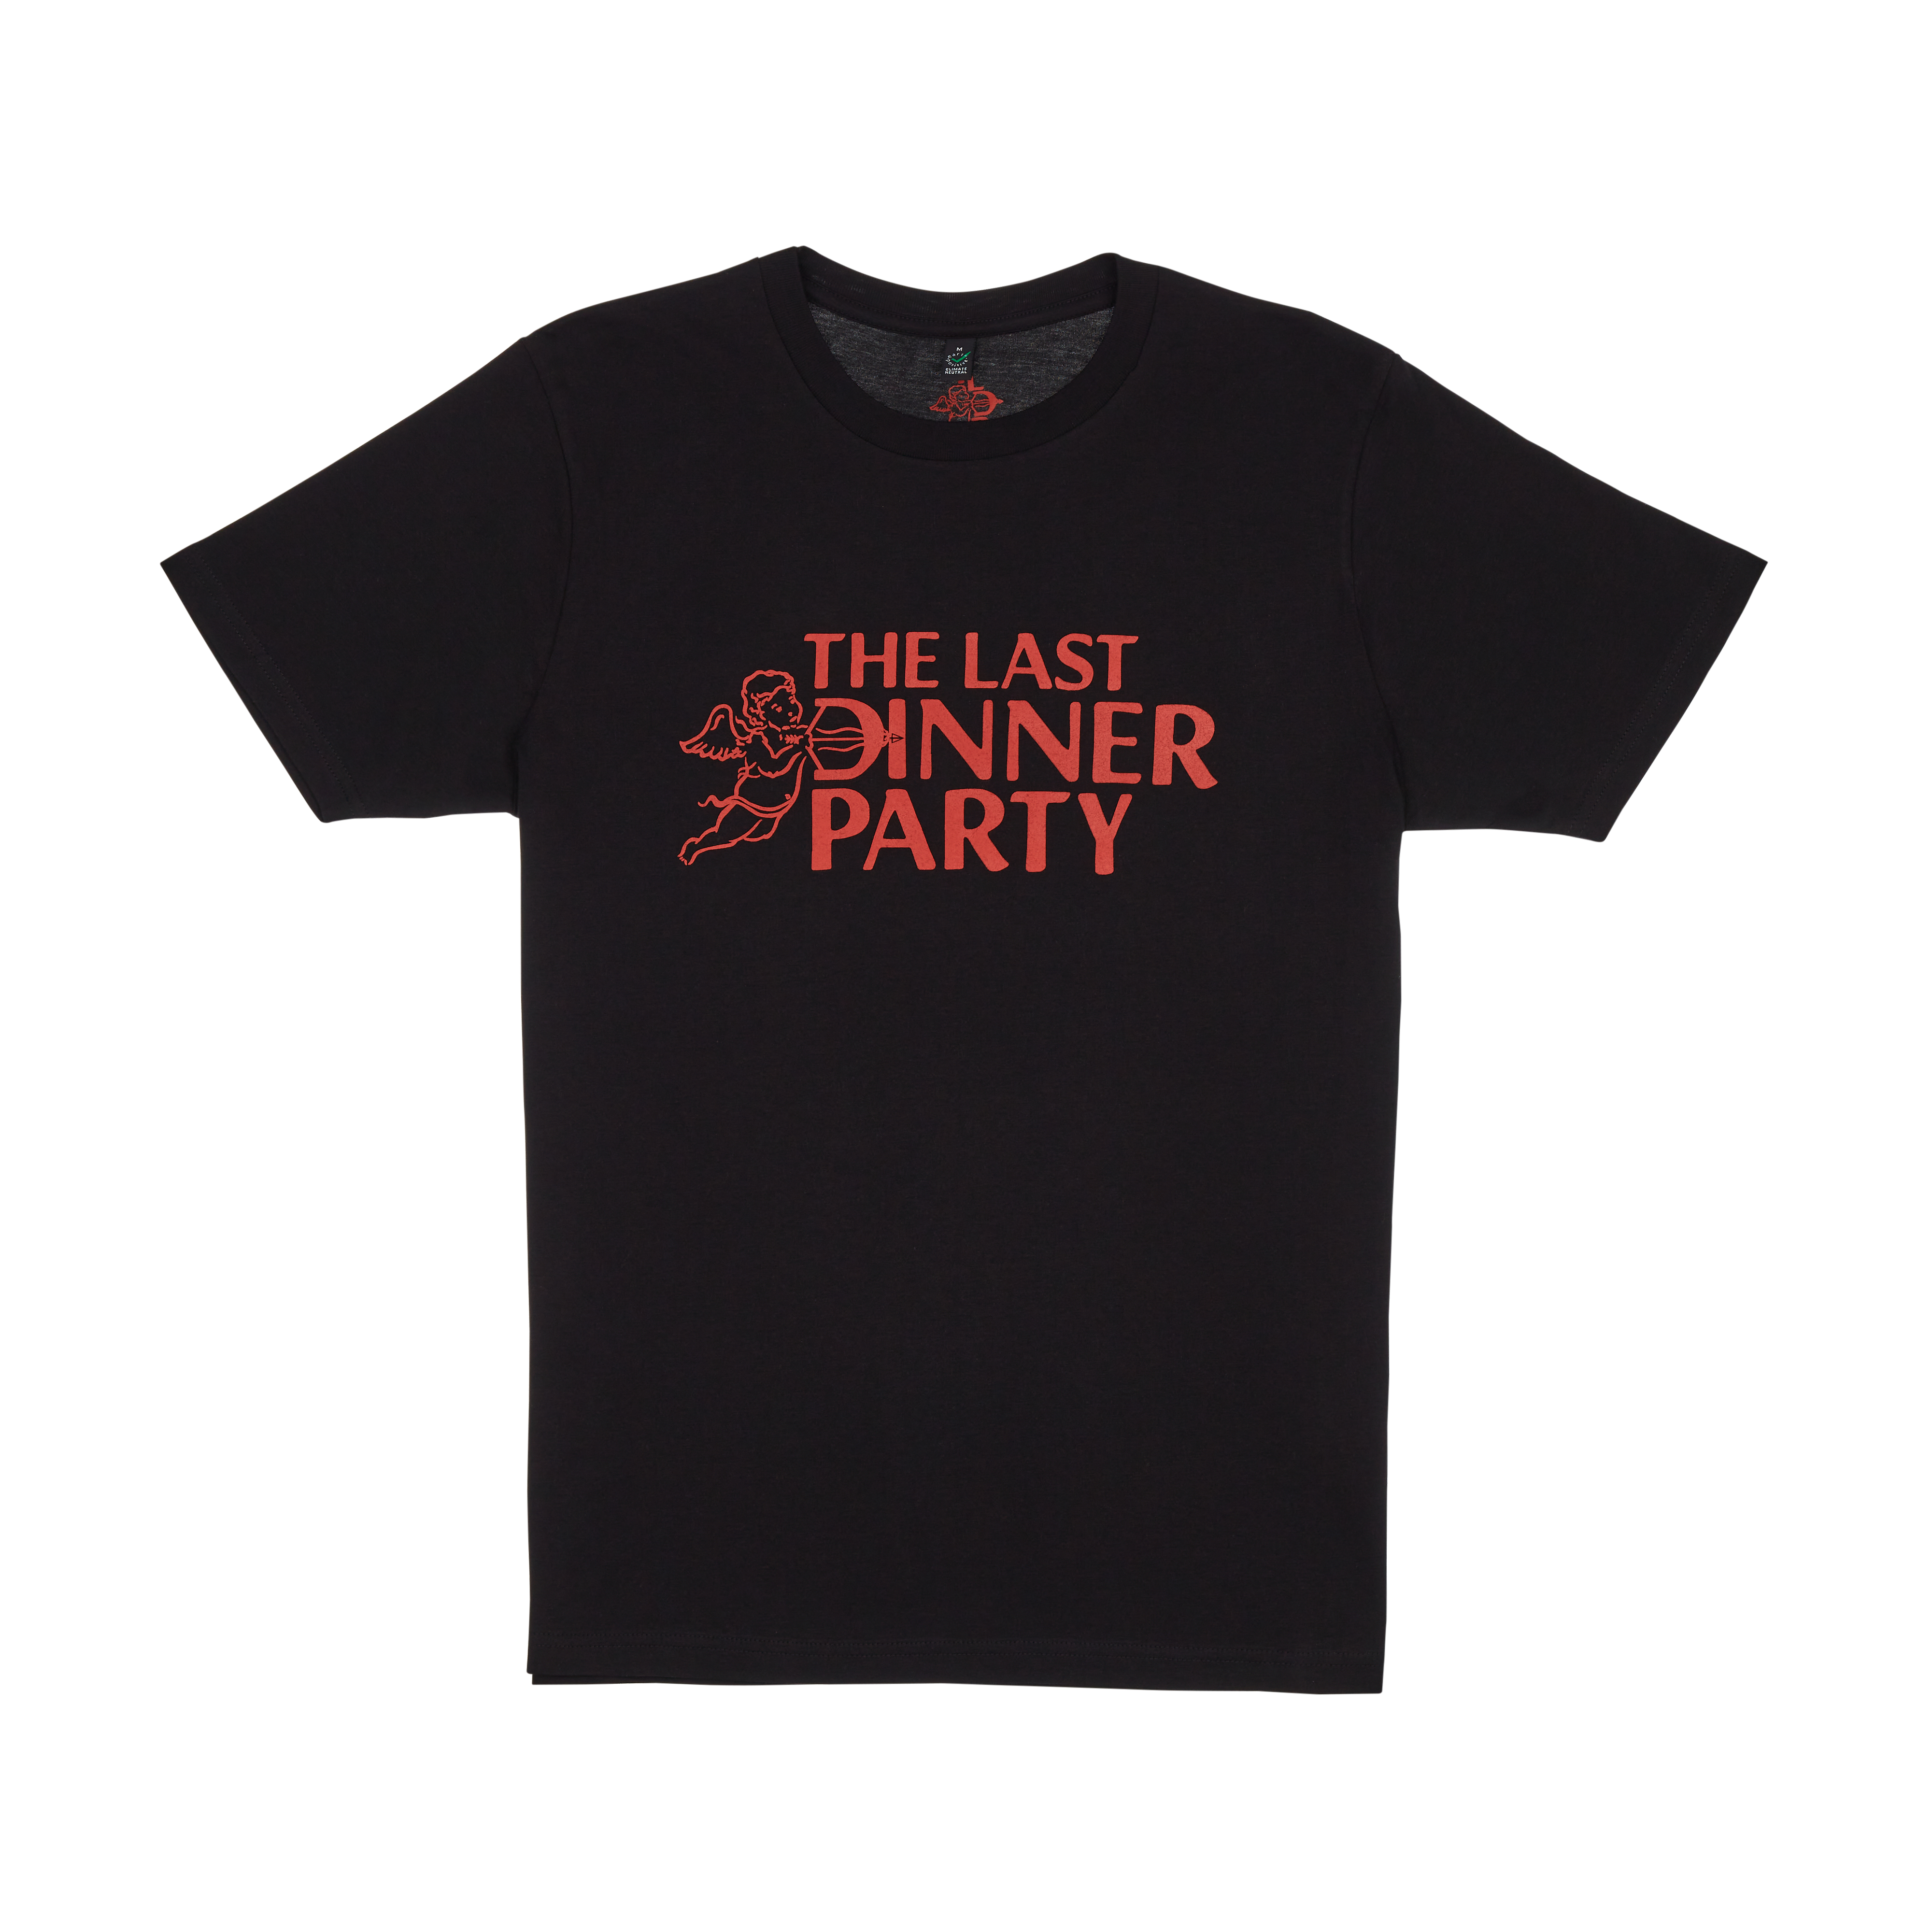 The Last Dinner Party - Black Logo Tee.